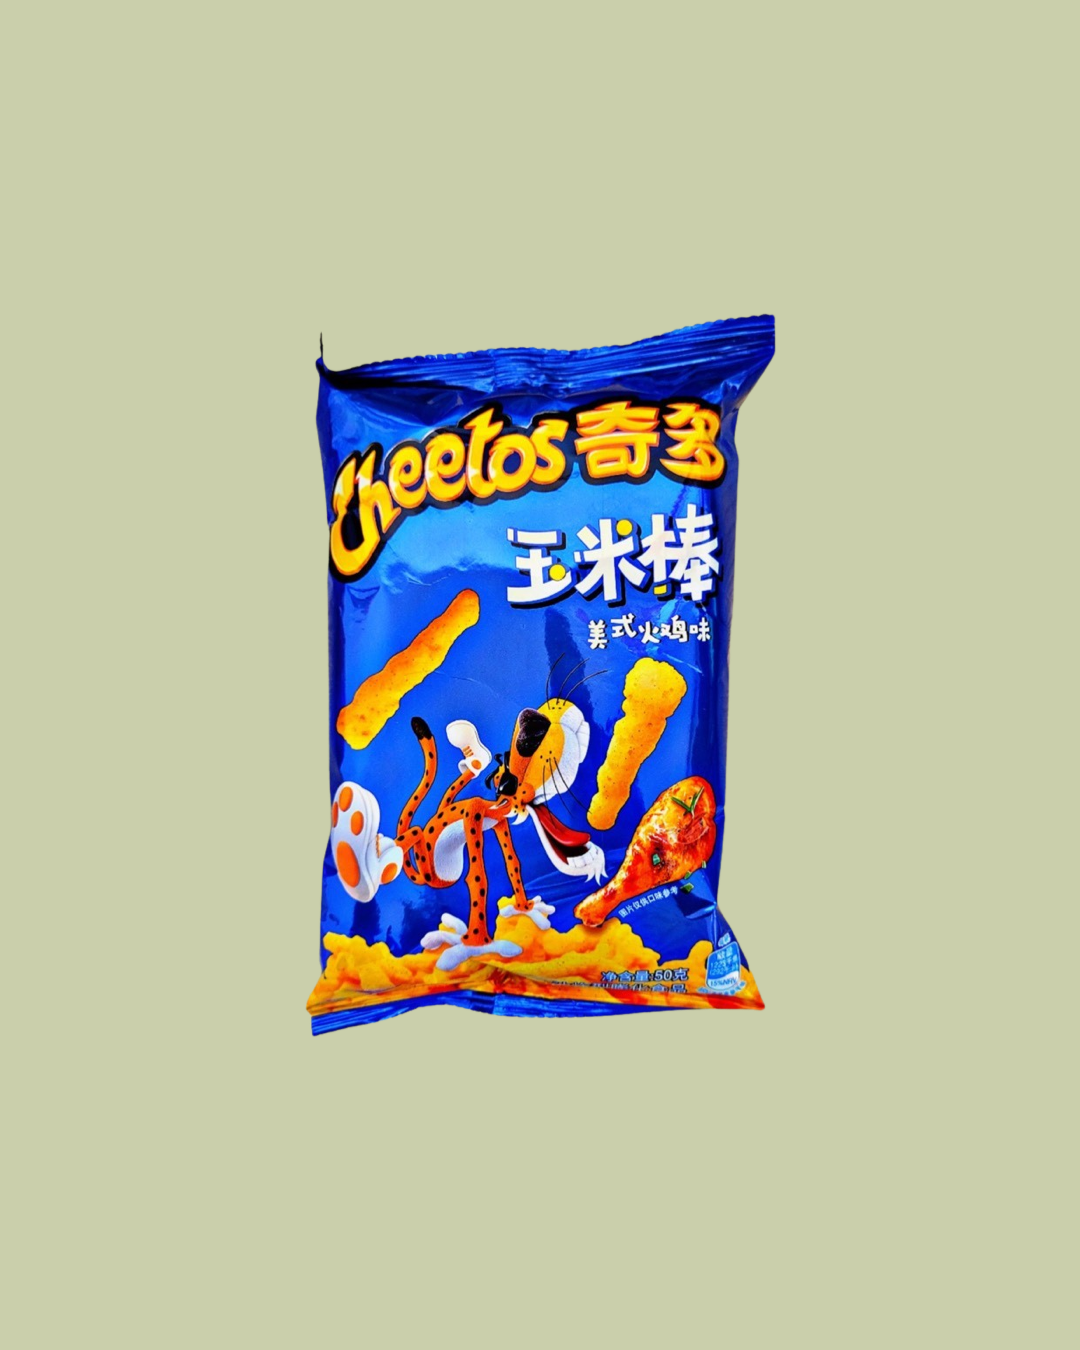 Cheetos American Roasted Turkey (China)